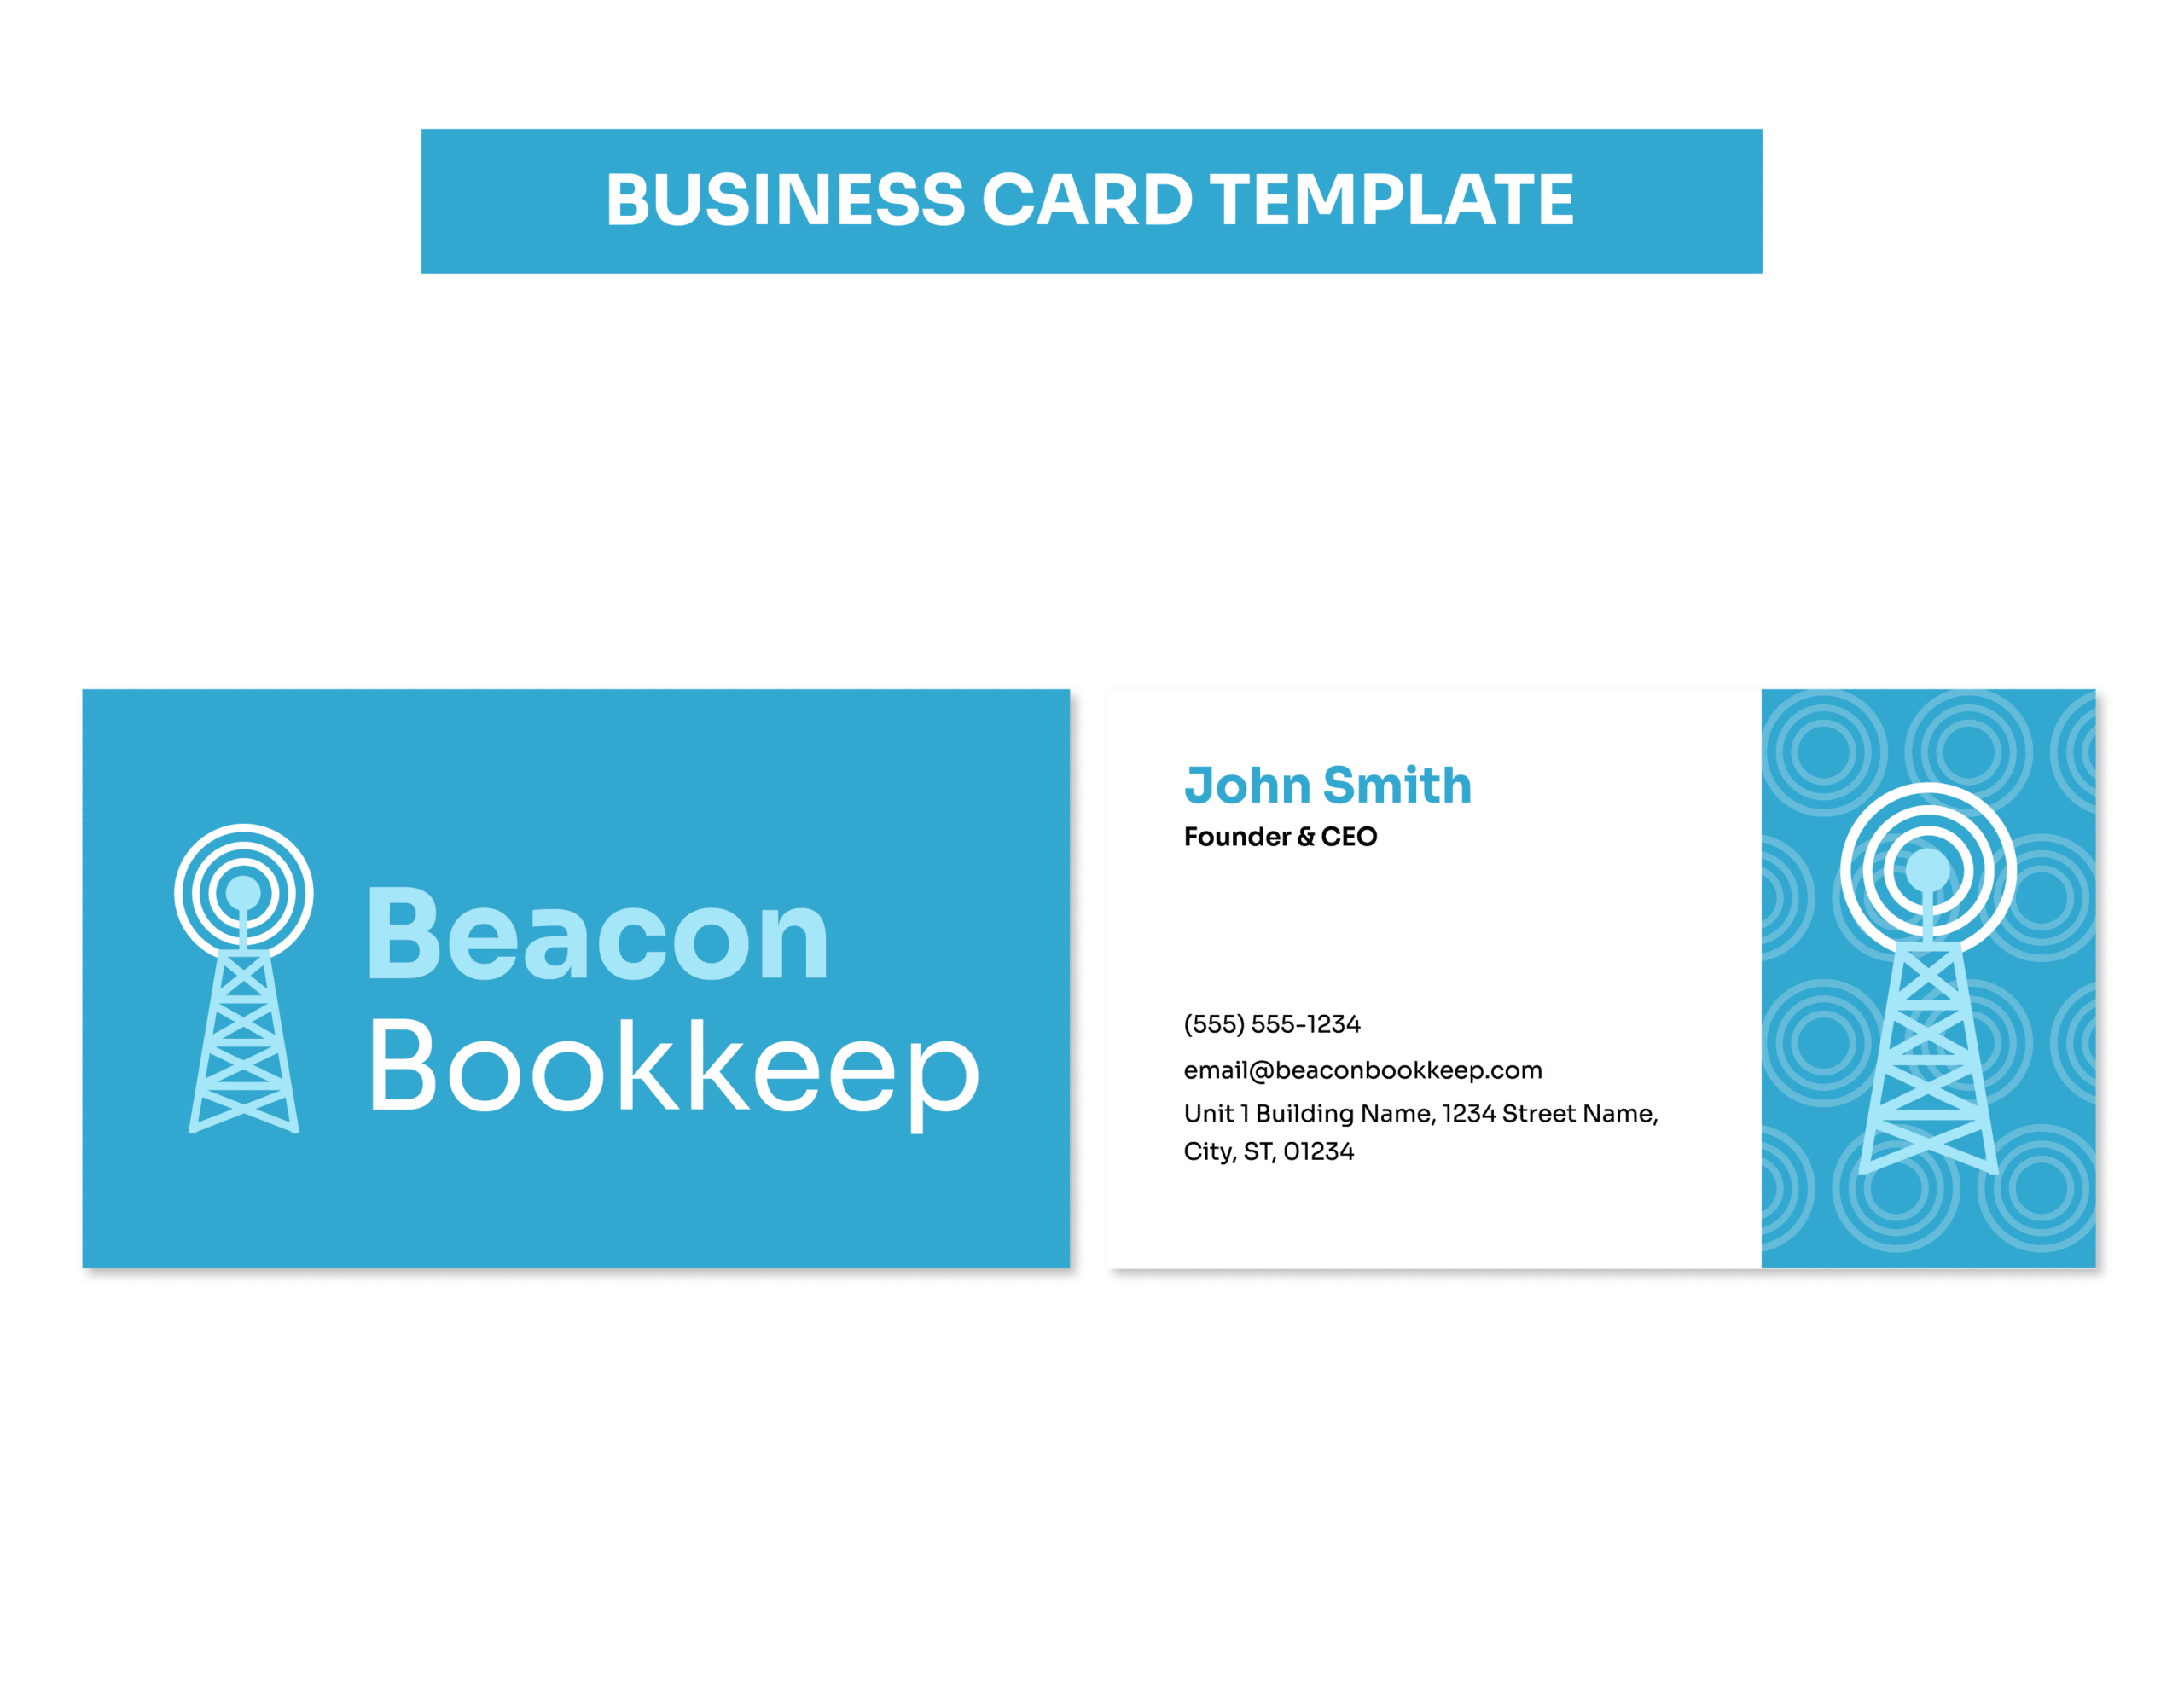 04BeaconBookkeep_Land_Showcase_Business Card Template